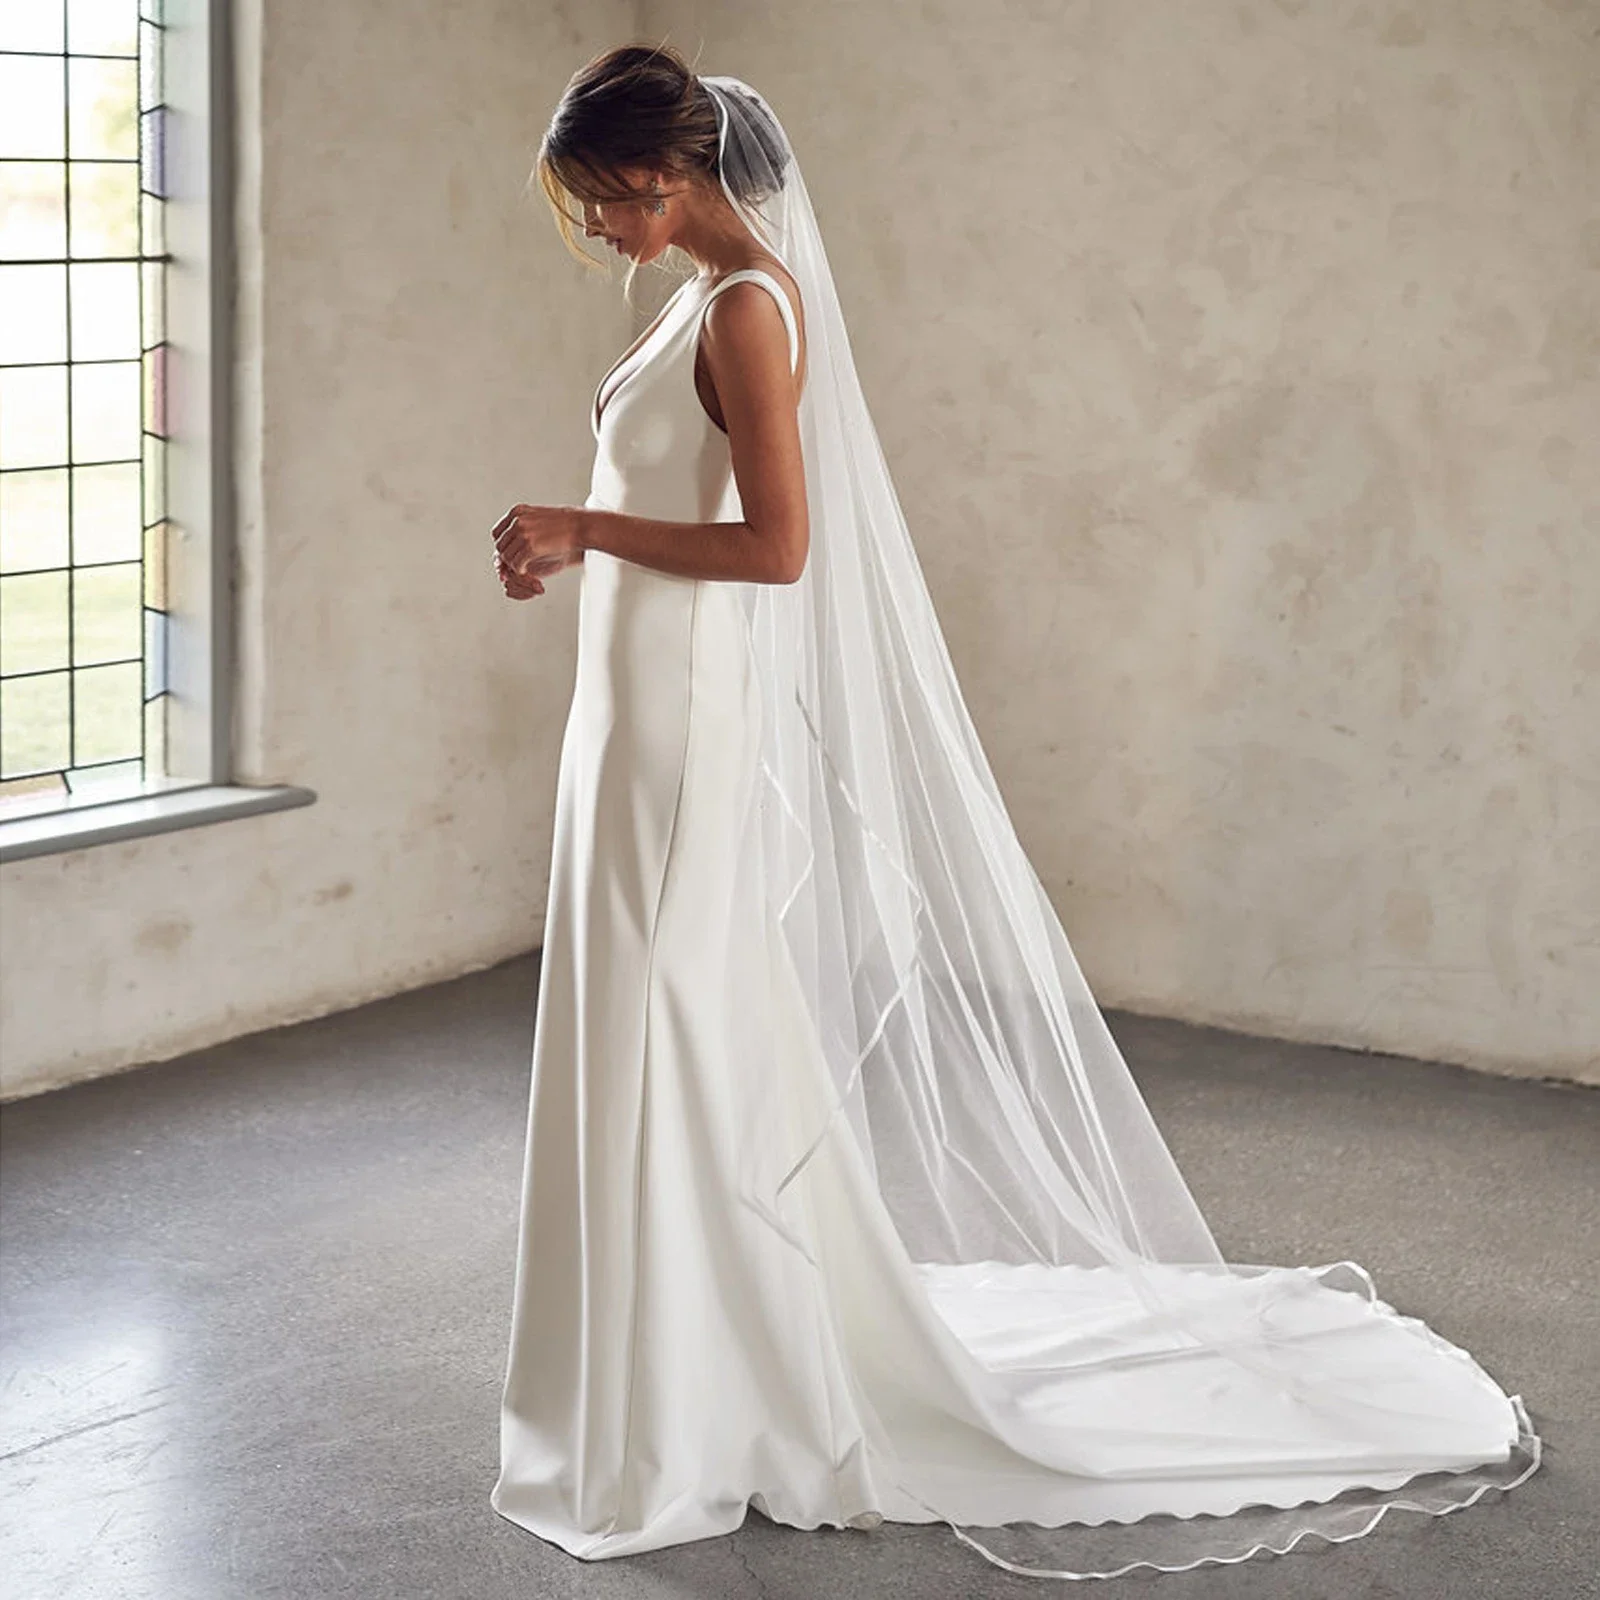 NZUK Long Bridal Veil with Ribbon Edge Wedding Veil Bride to Be 3 M White Ivory Wedding Veil Photo Accessory Cathedral Veil